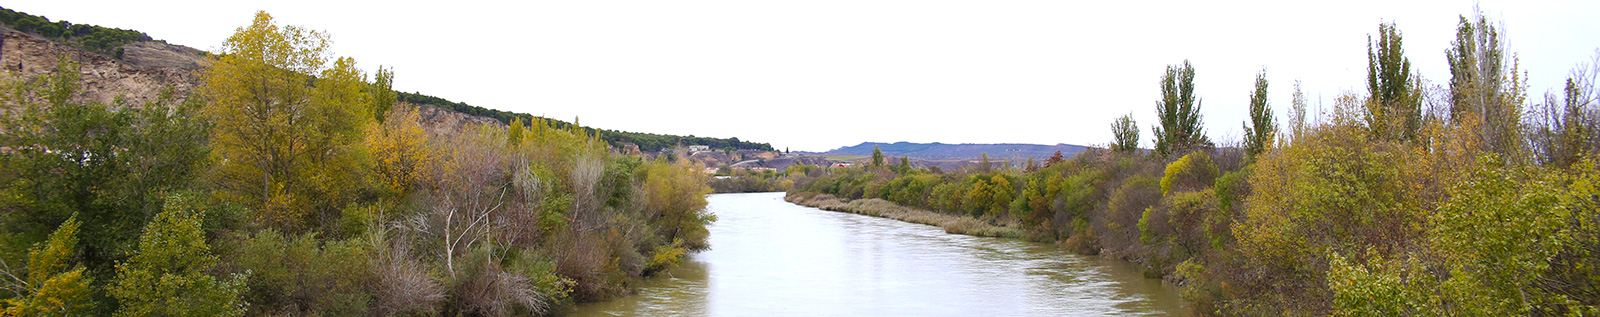 río_Arga_alta_SMS